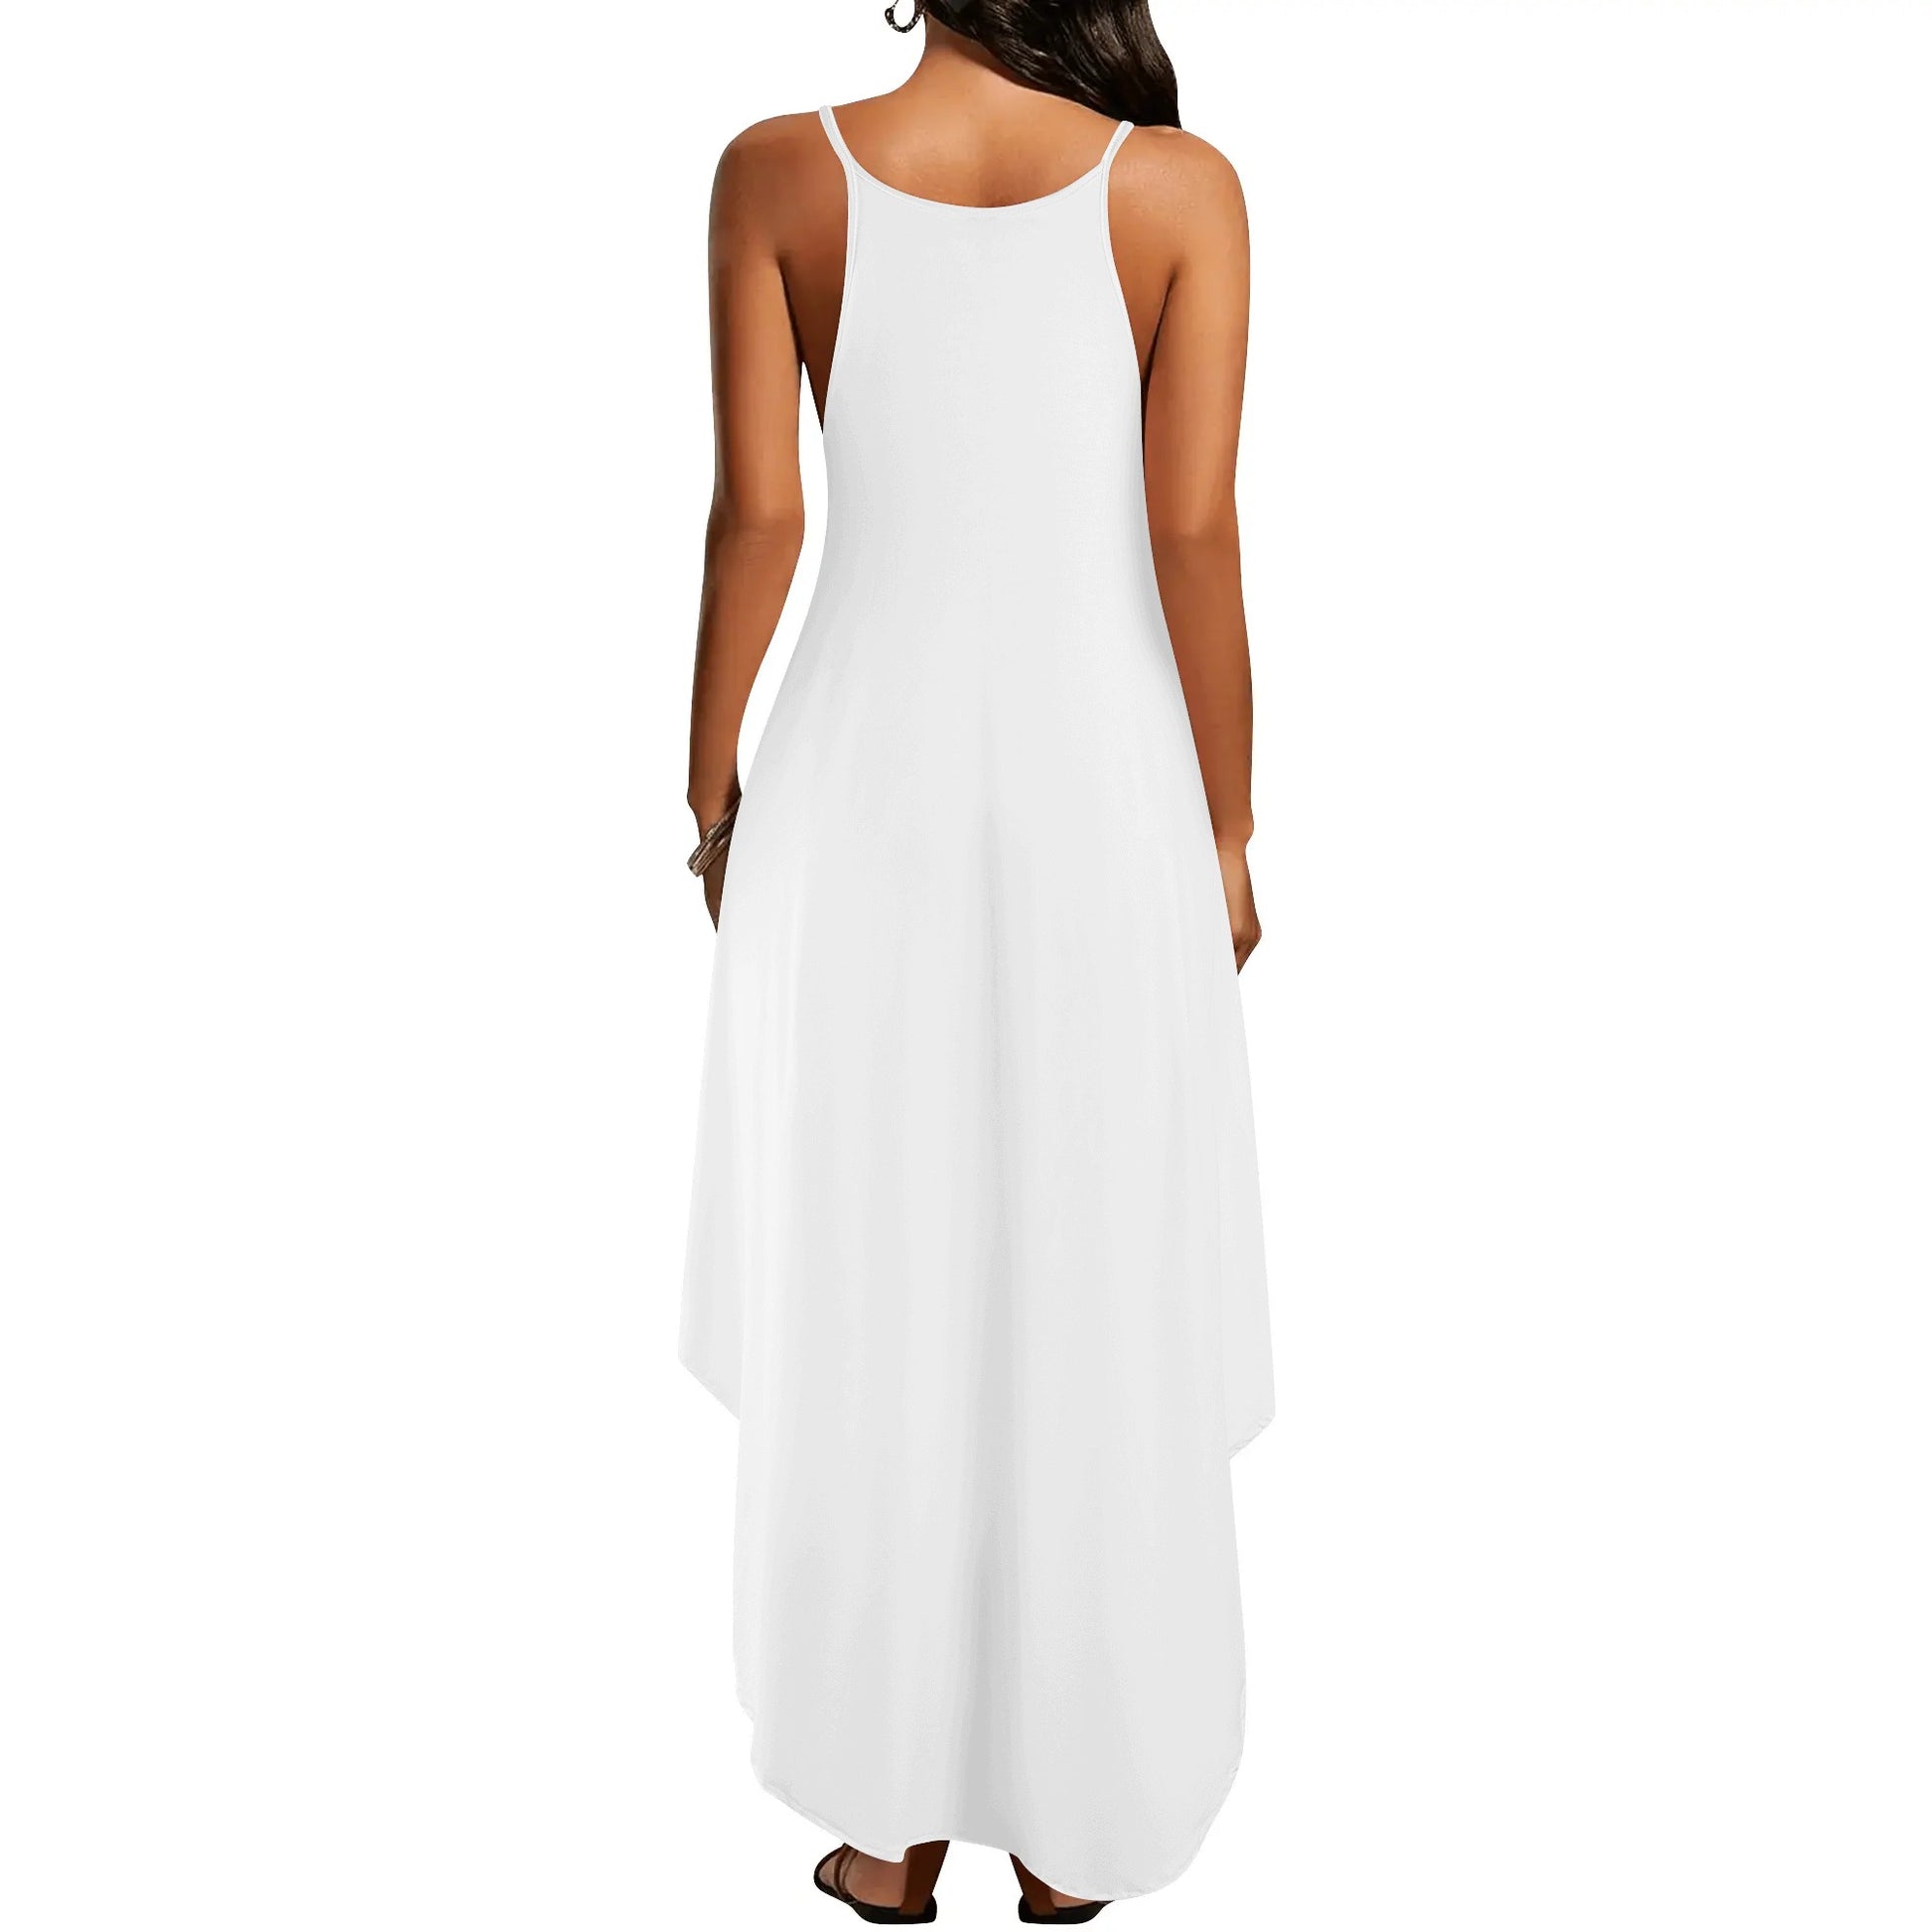 In Christ I Am Flawlessly & Purposefully Created Womens Christian Elegant Sleeveless Summer Maxi Dress popcustoms